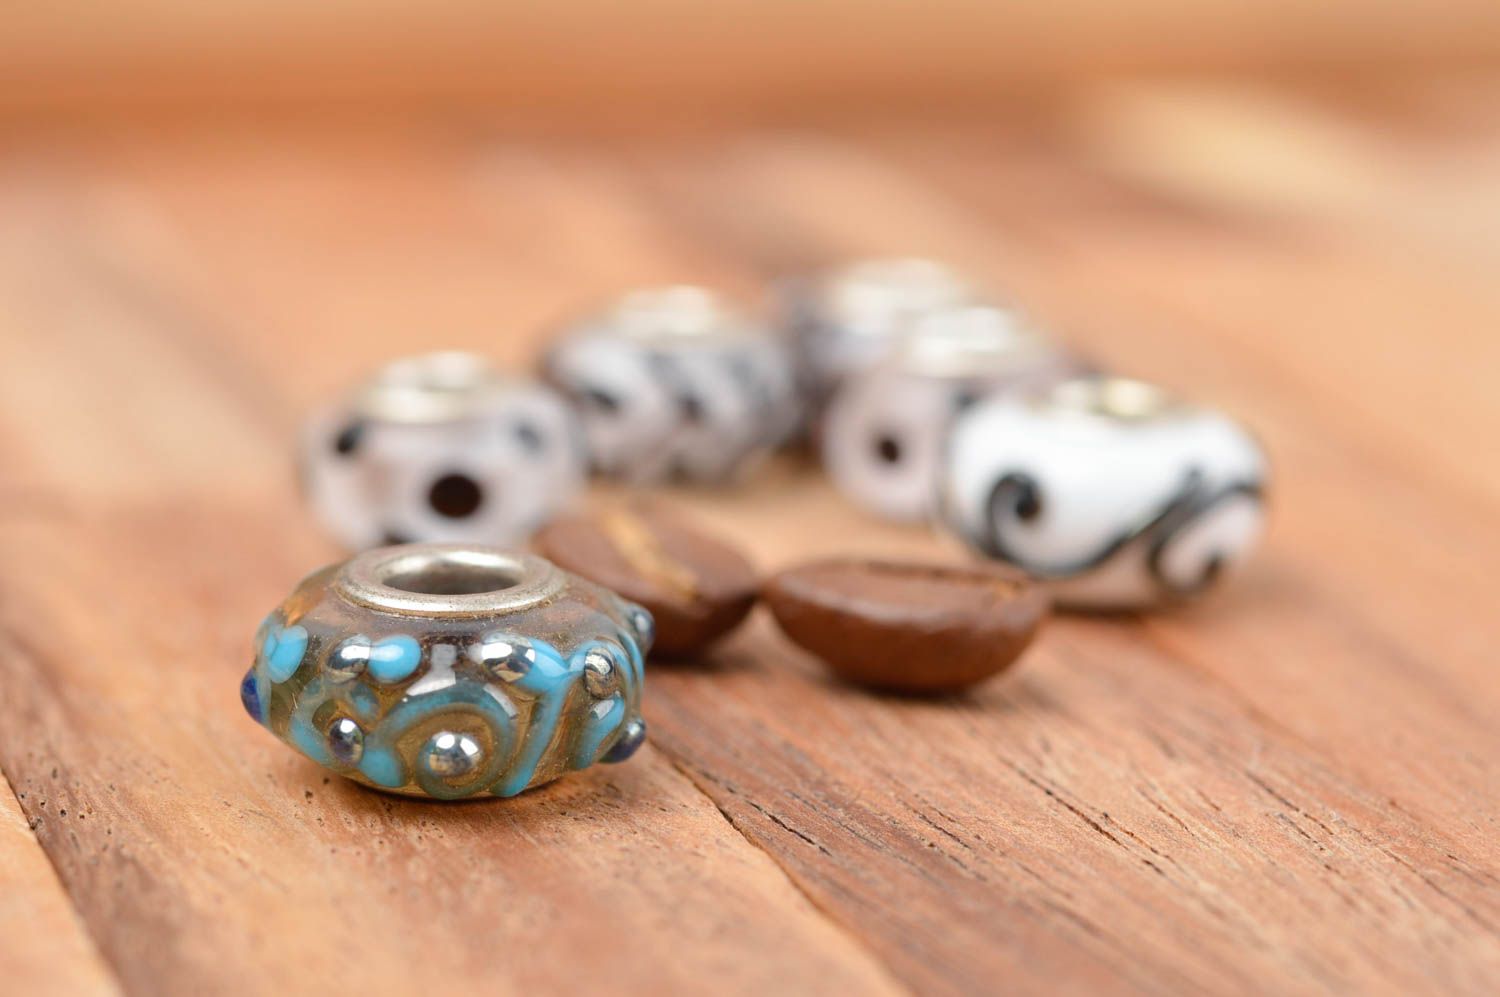 Beautiful handmade glass bead fashion accessories jewelry making ideas photo 1